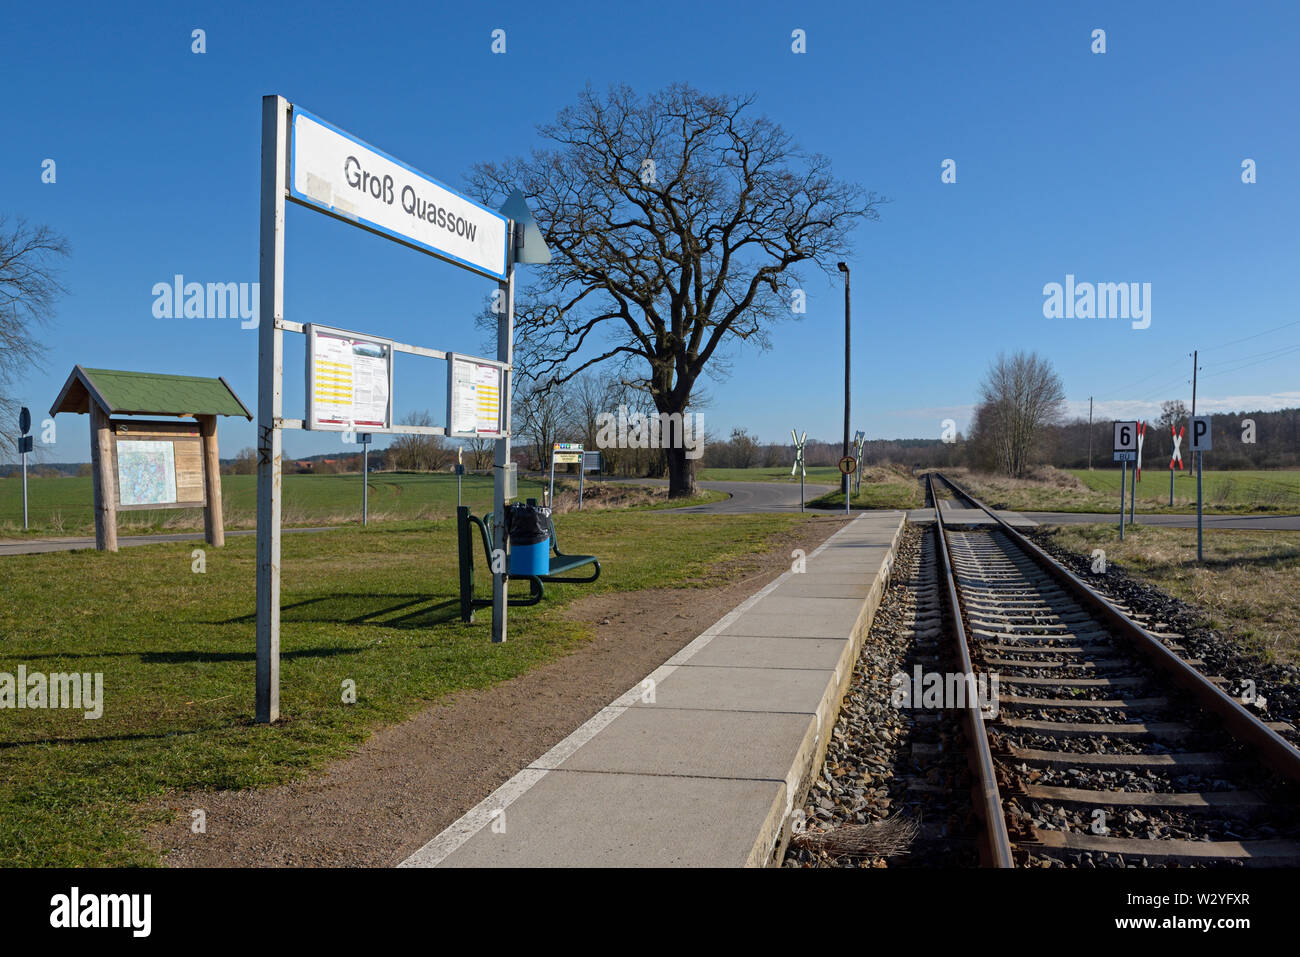 Piccola stazione ferroviaria, aprile, Gross Quassow, Meclenburgo-Pomerania Occidentale, Germania Foto Stock